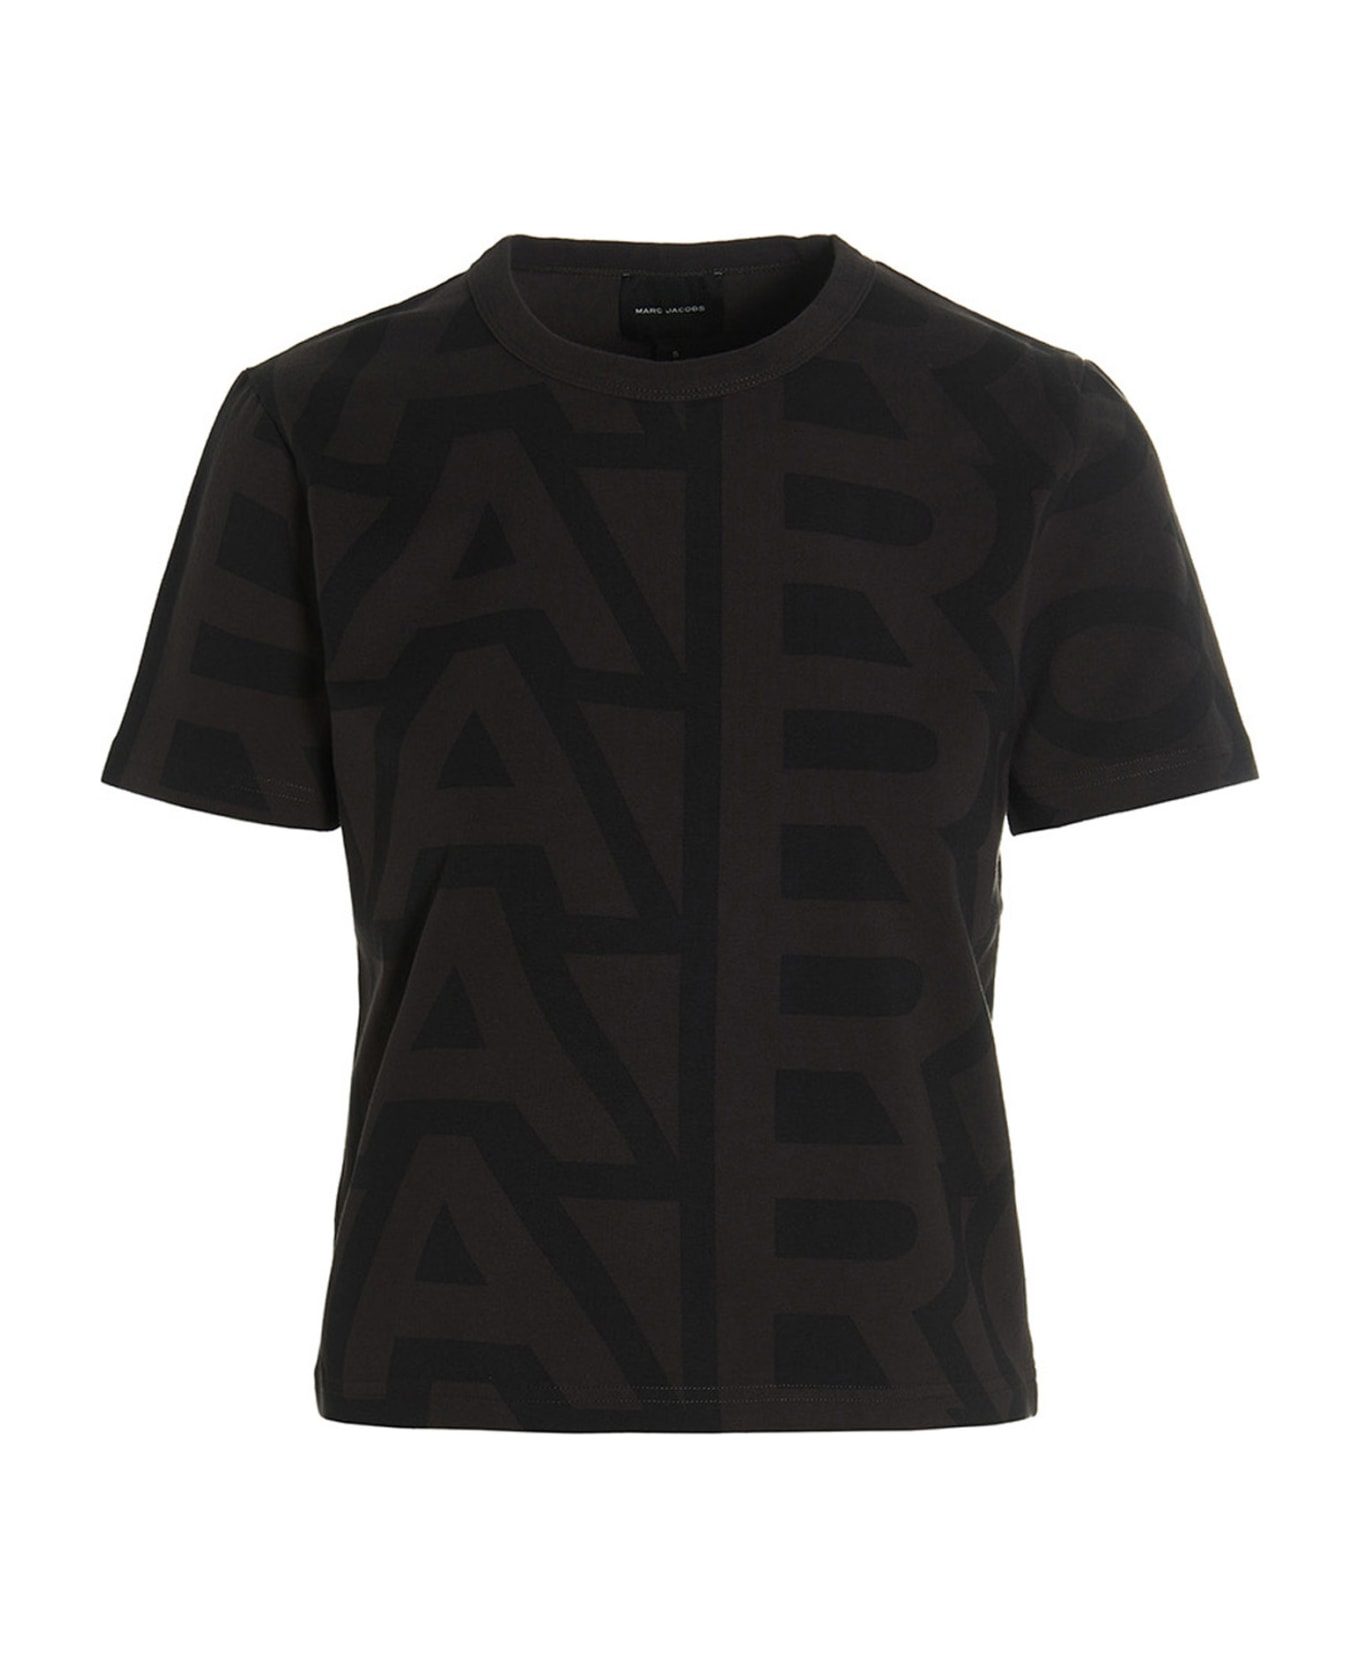 Marc Jacobs 'monogram Baby' T-shirt - Black  